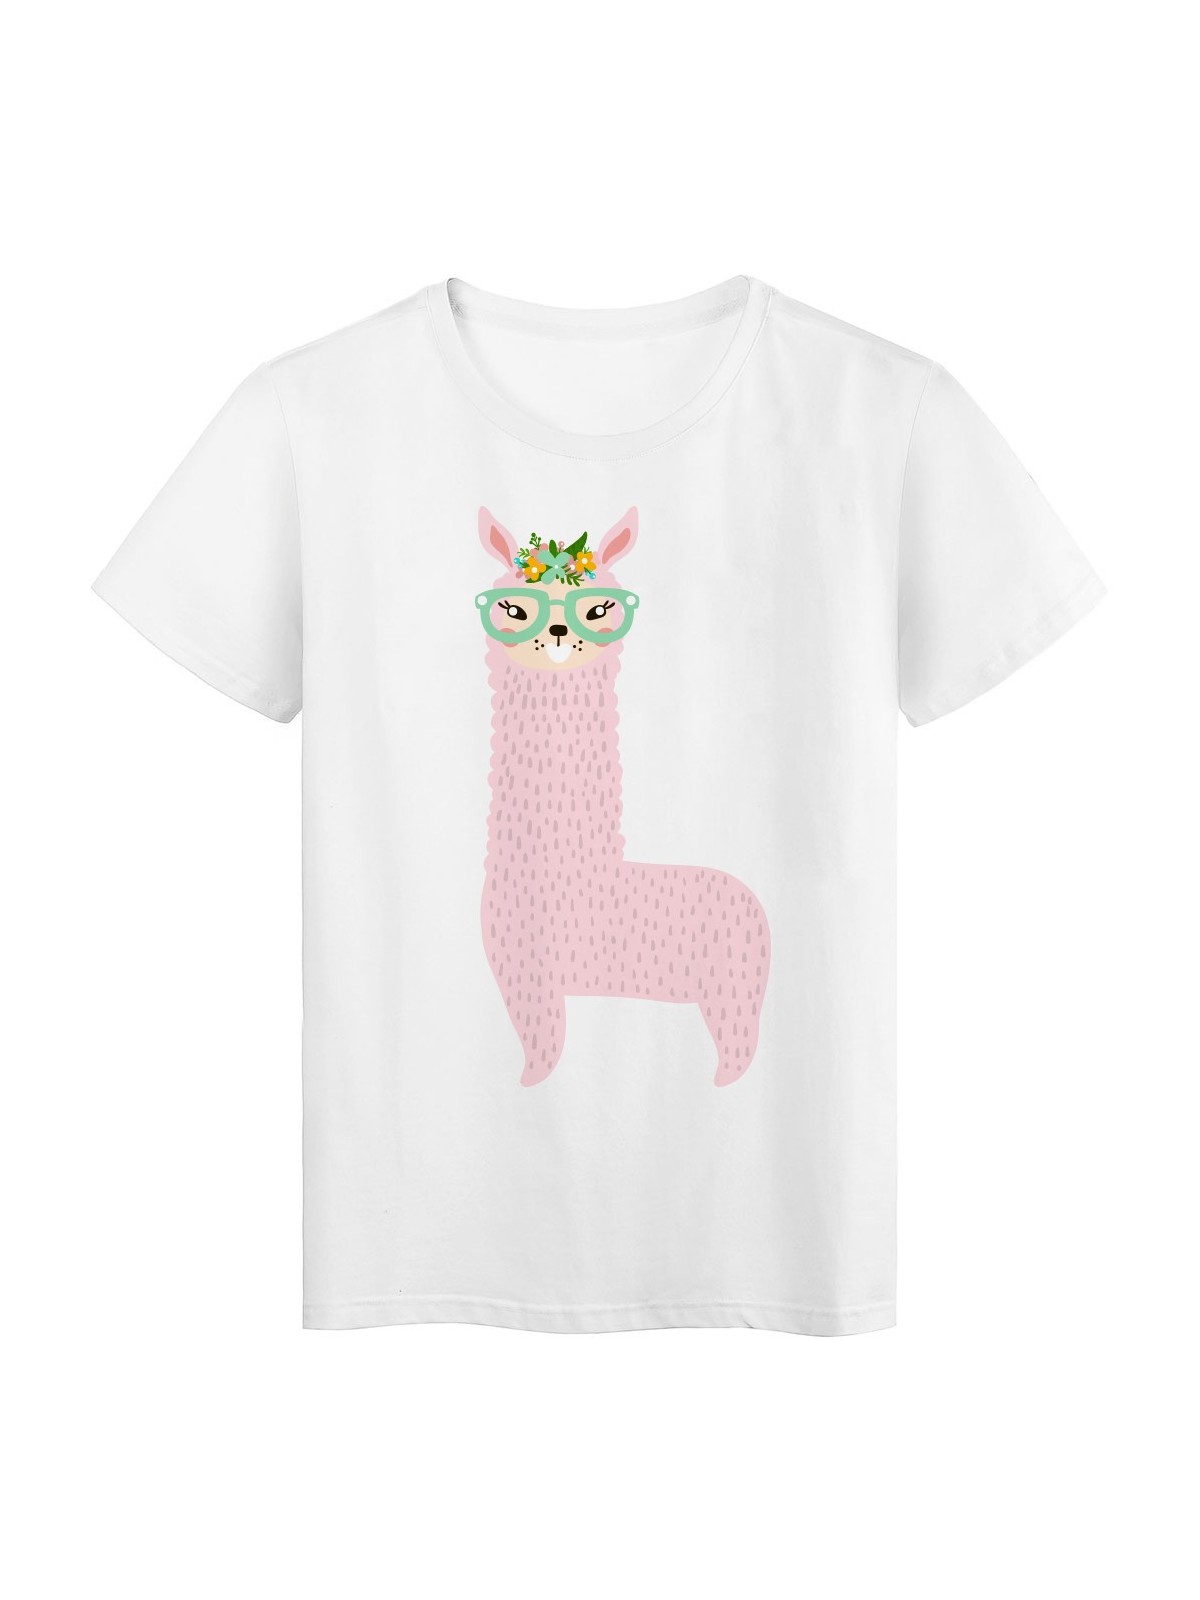 T-Shirt blanc design Lama rose avec lunettes rÃ©f Tee shirt 2150